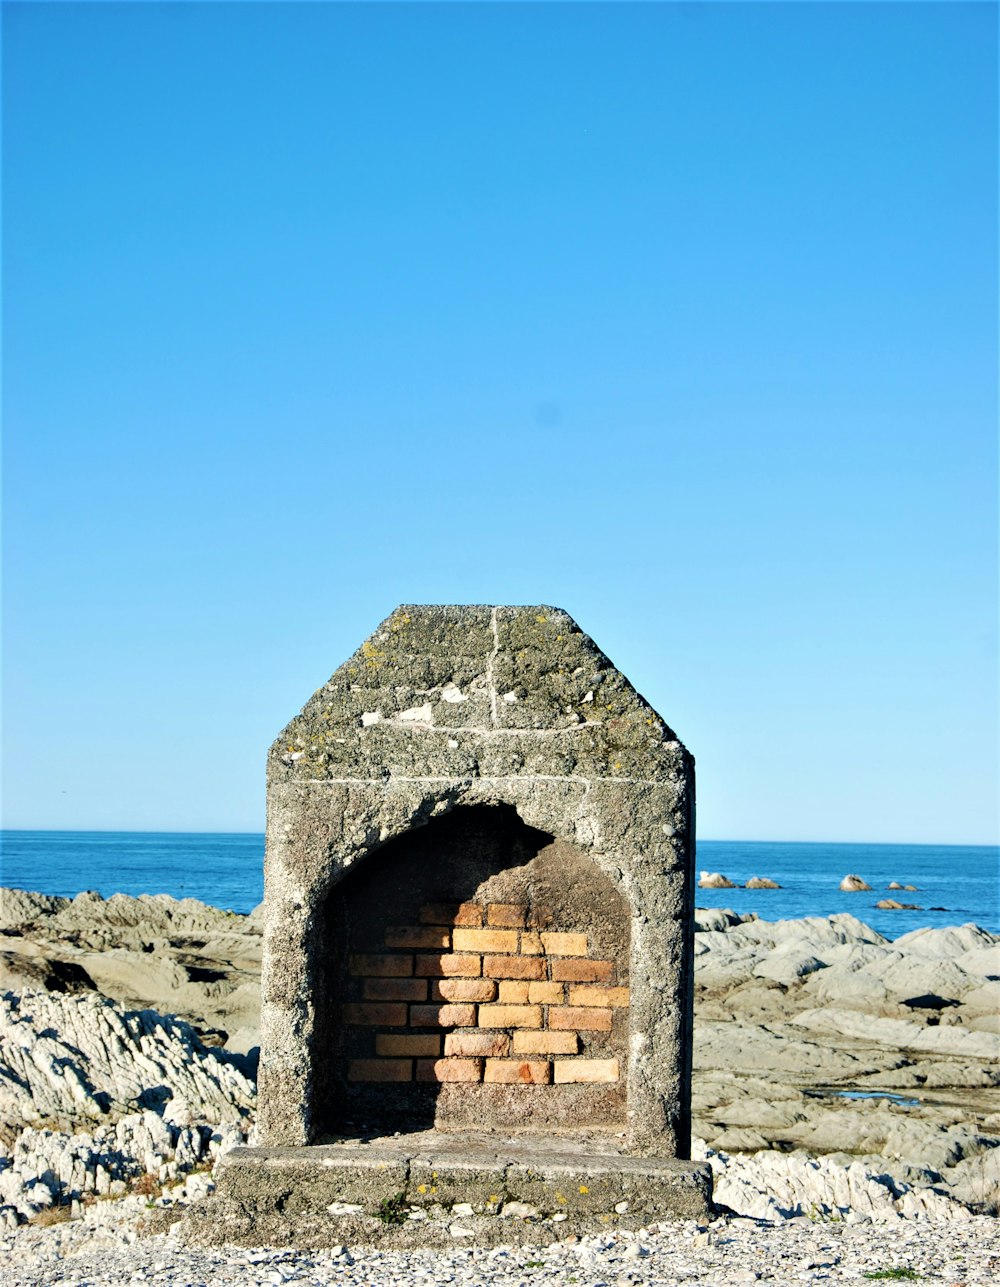 a brick chimney on a beach